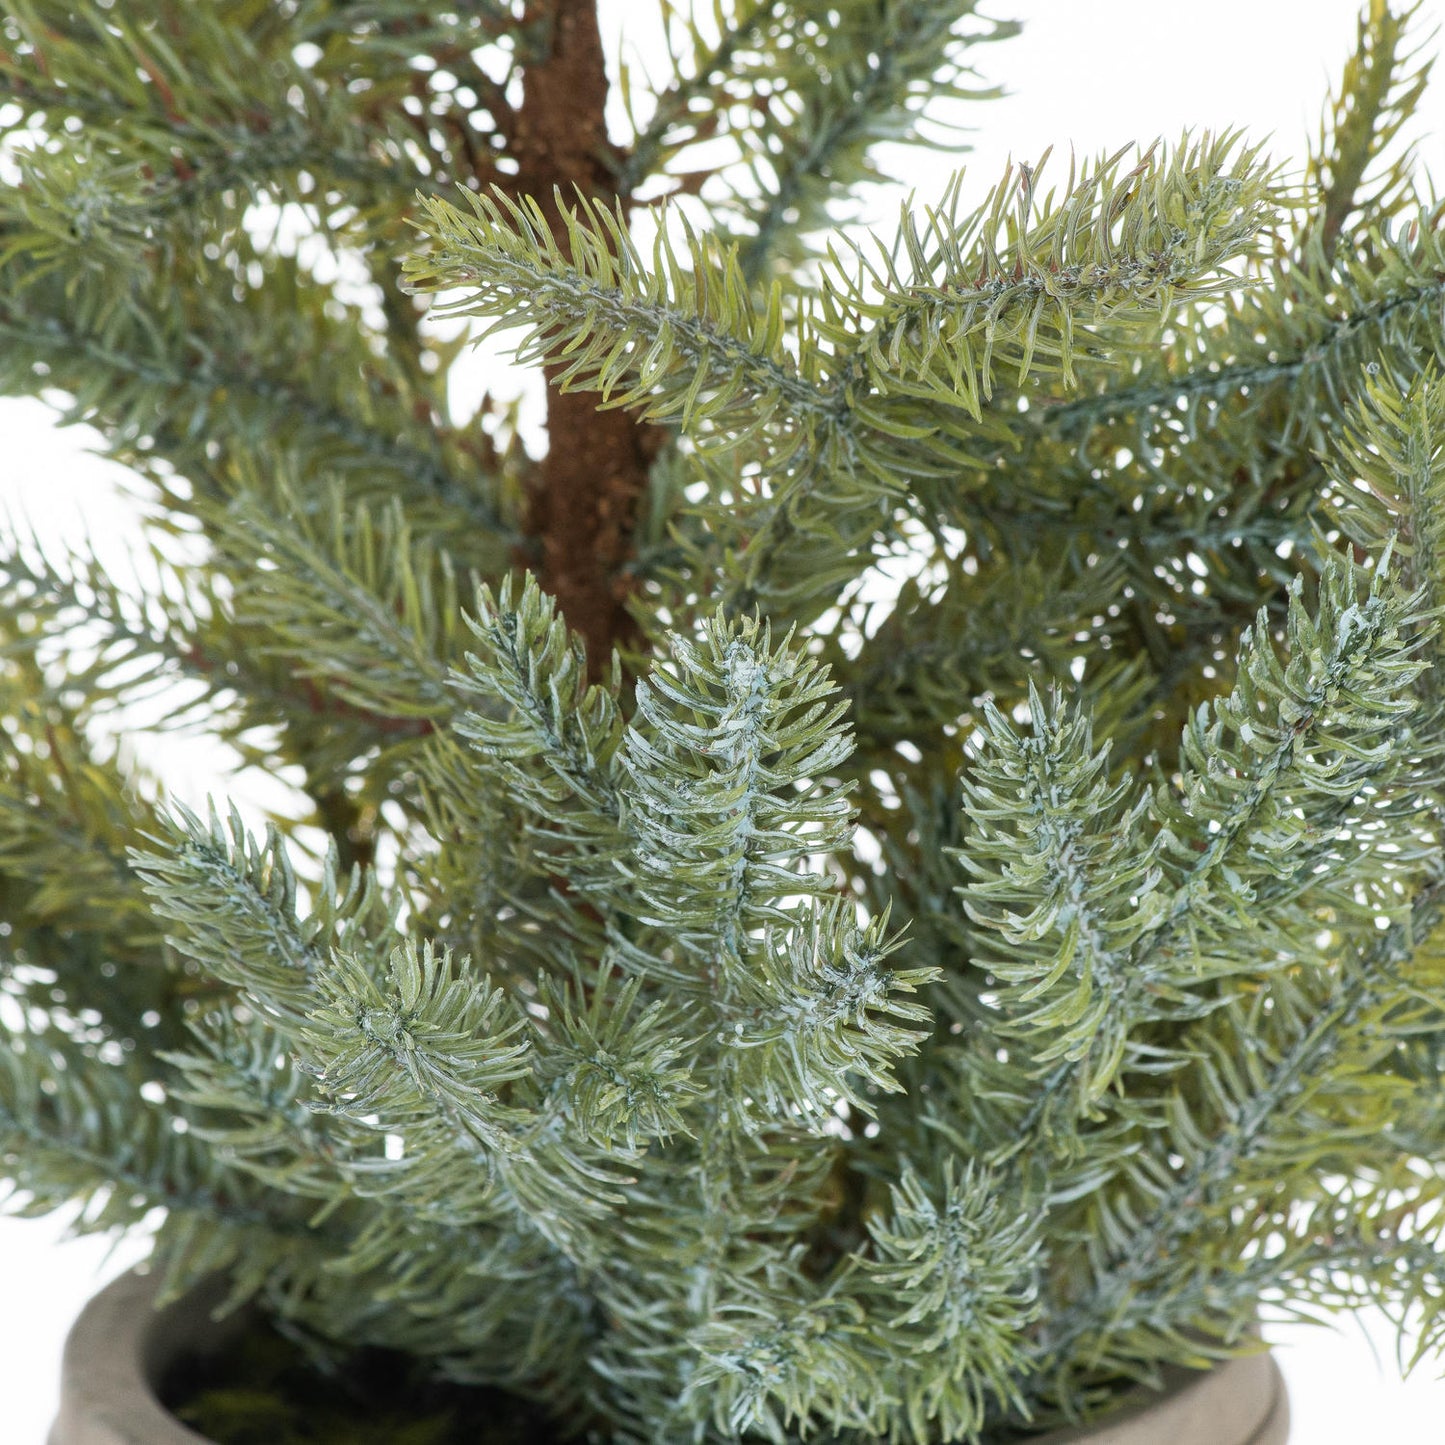 Garda Pine Faux Christmas Tree in Stone Pot 48cm